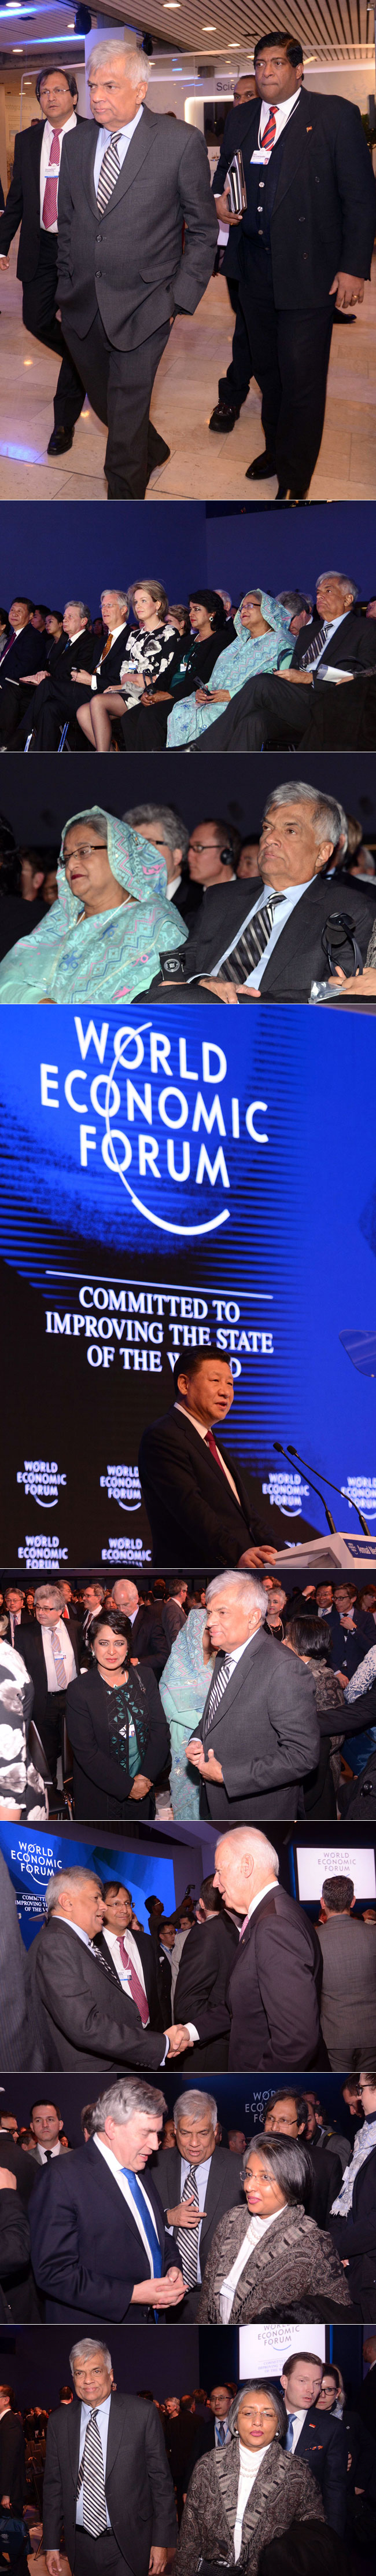 PM attends World Economic Forum...